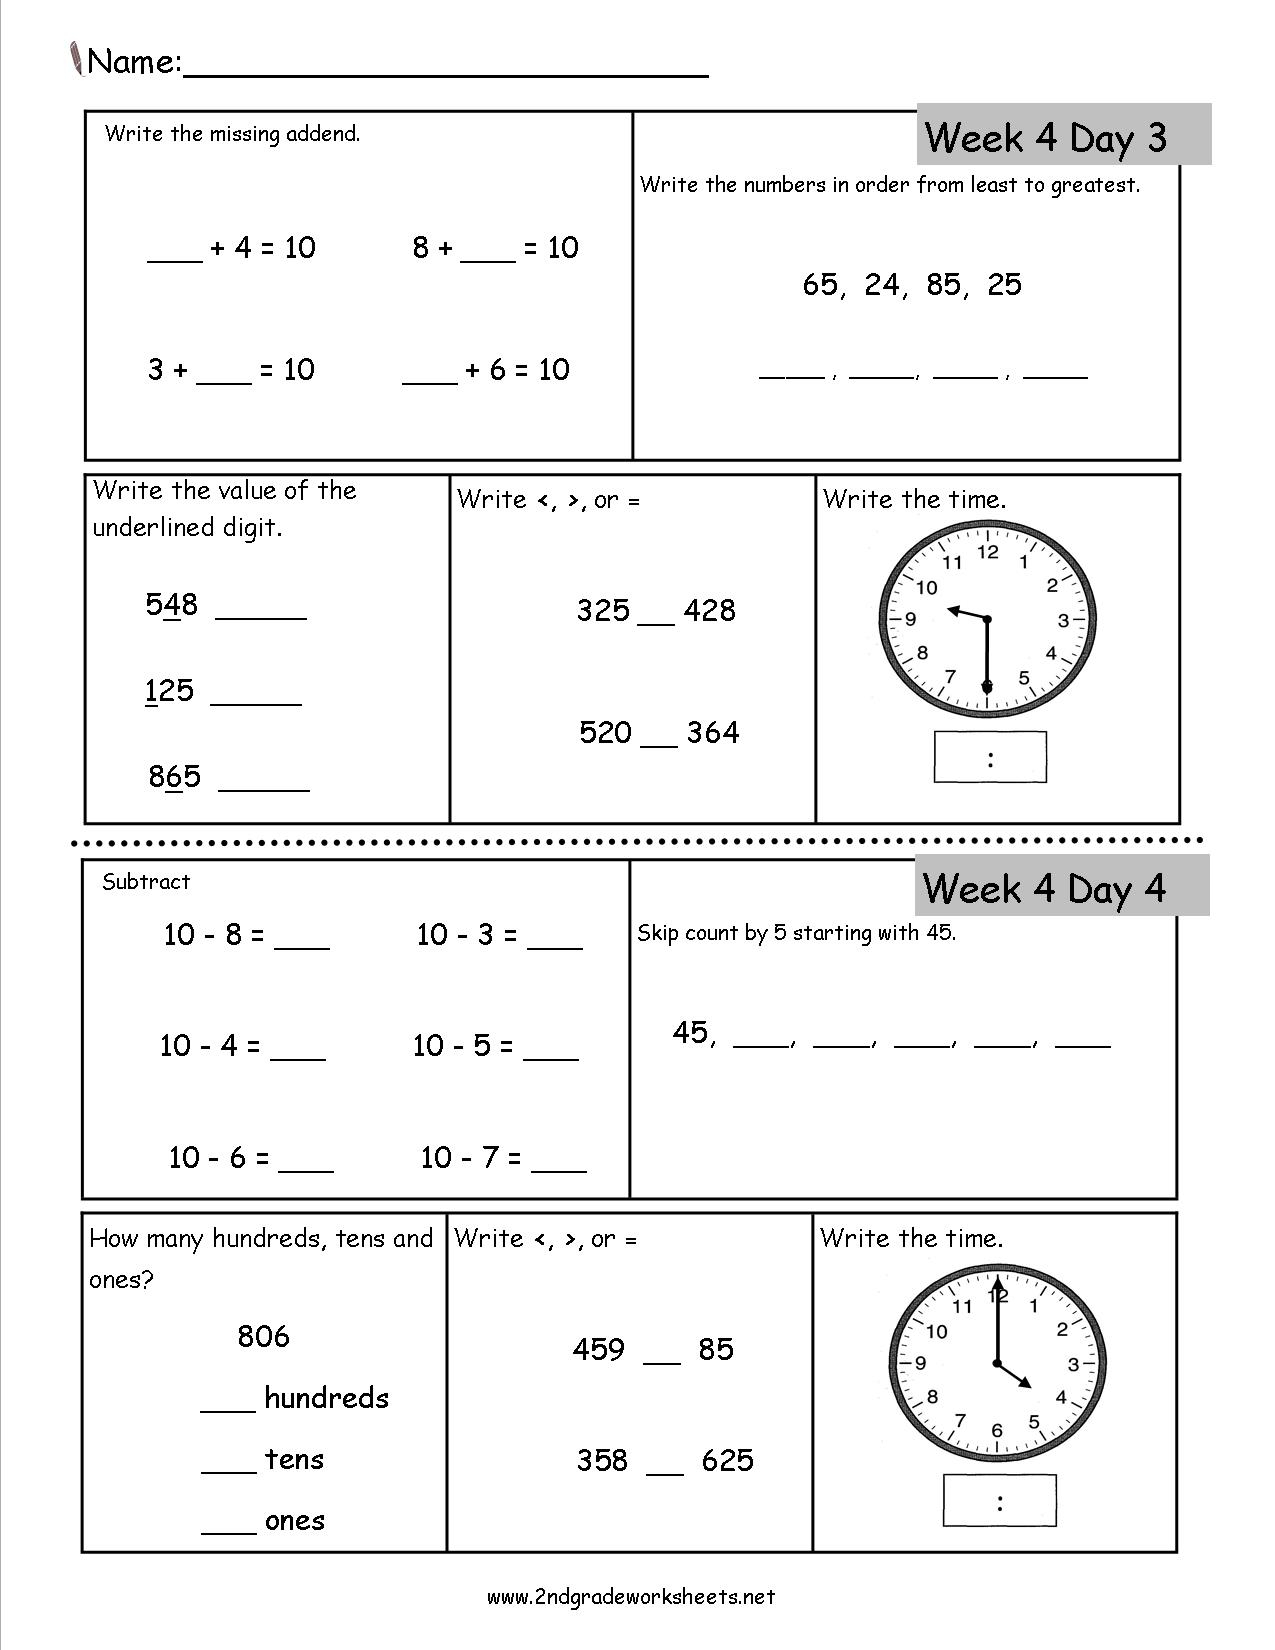 Free Printable 2nd Grade Worksheets